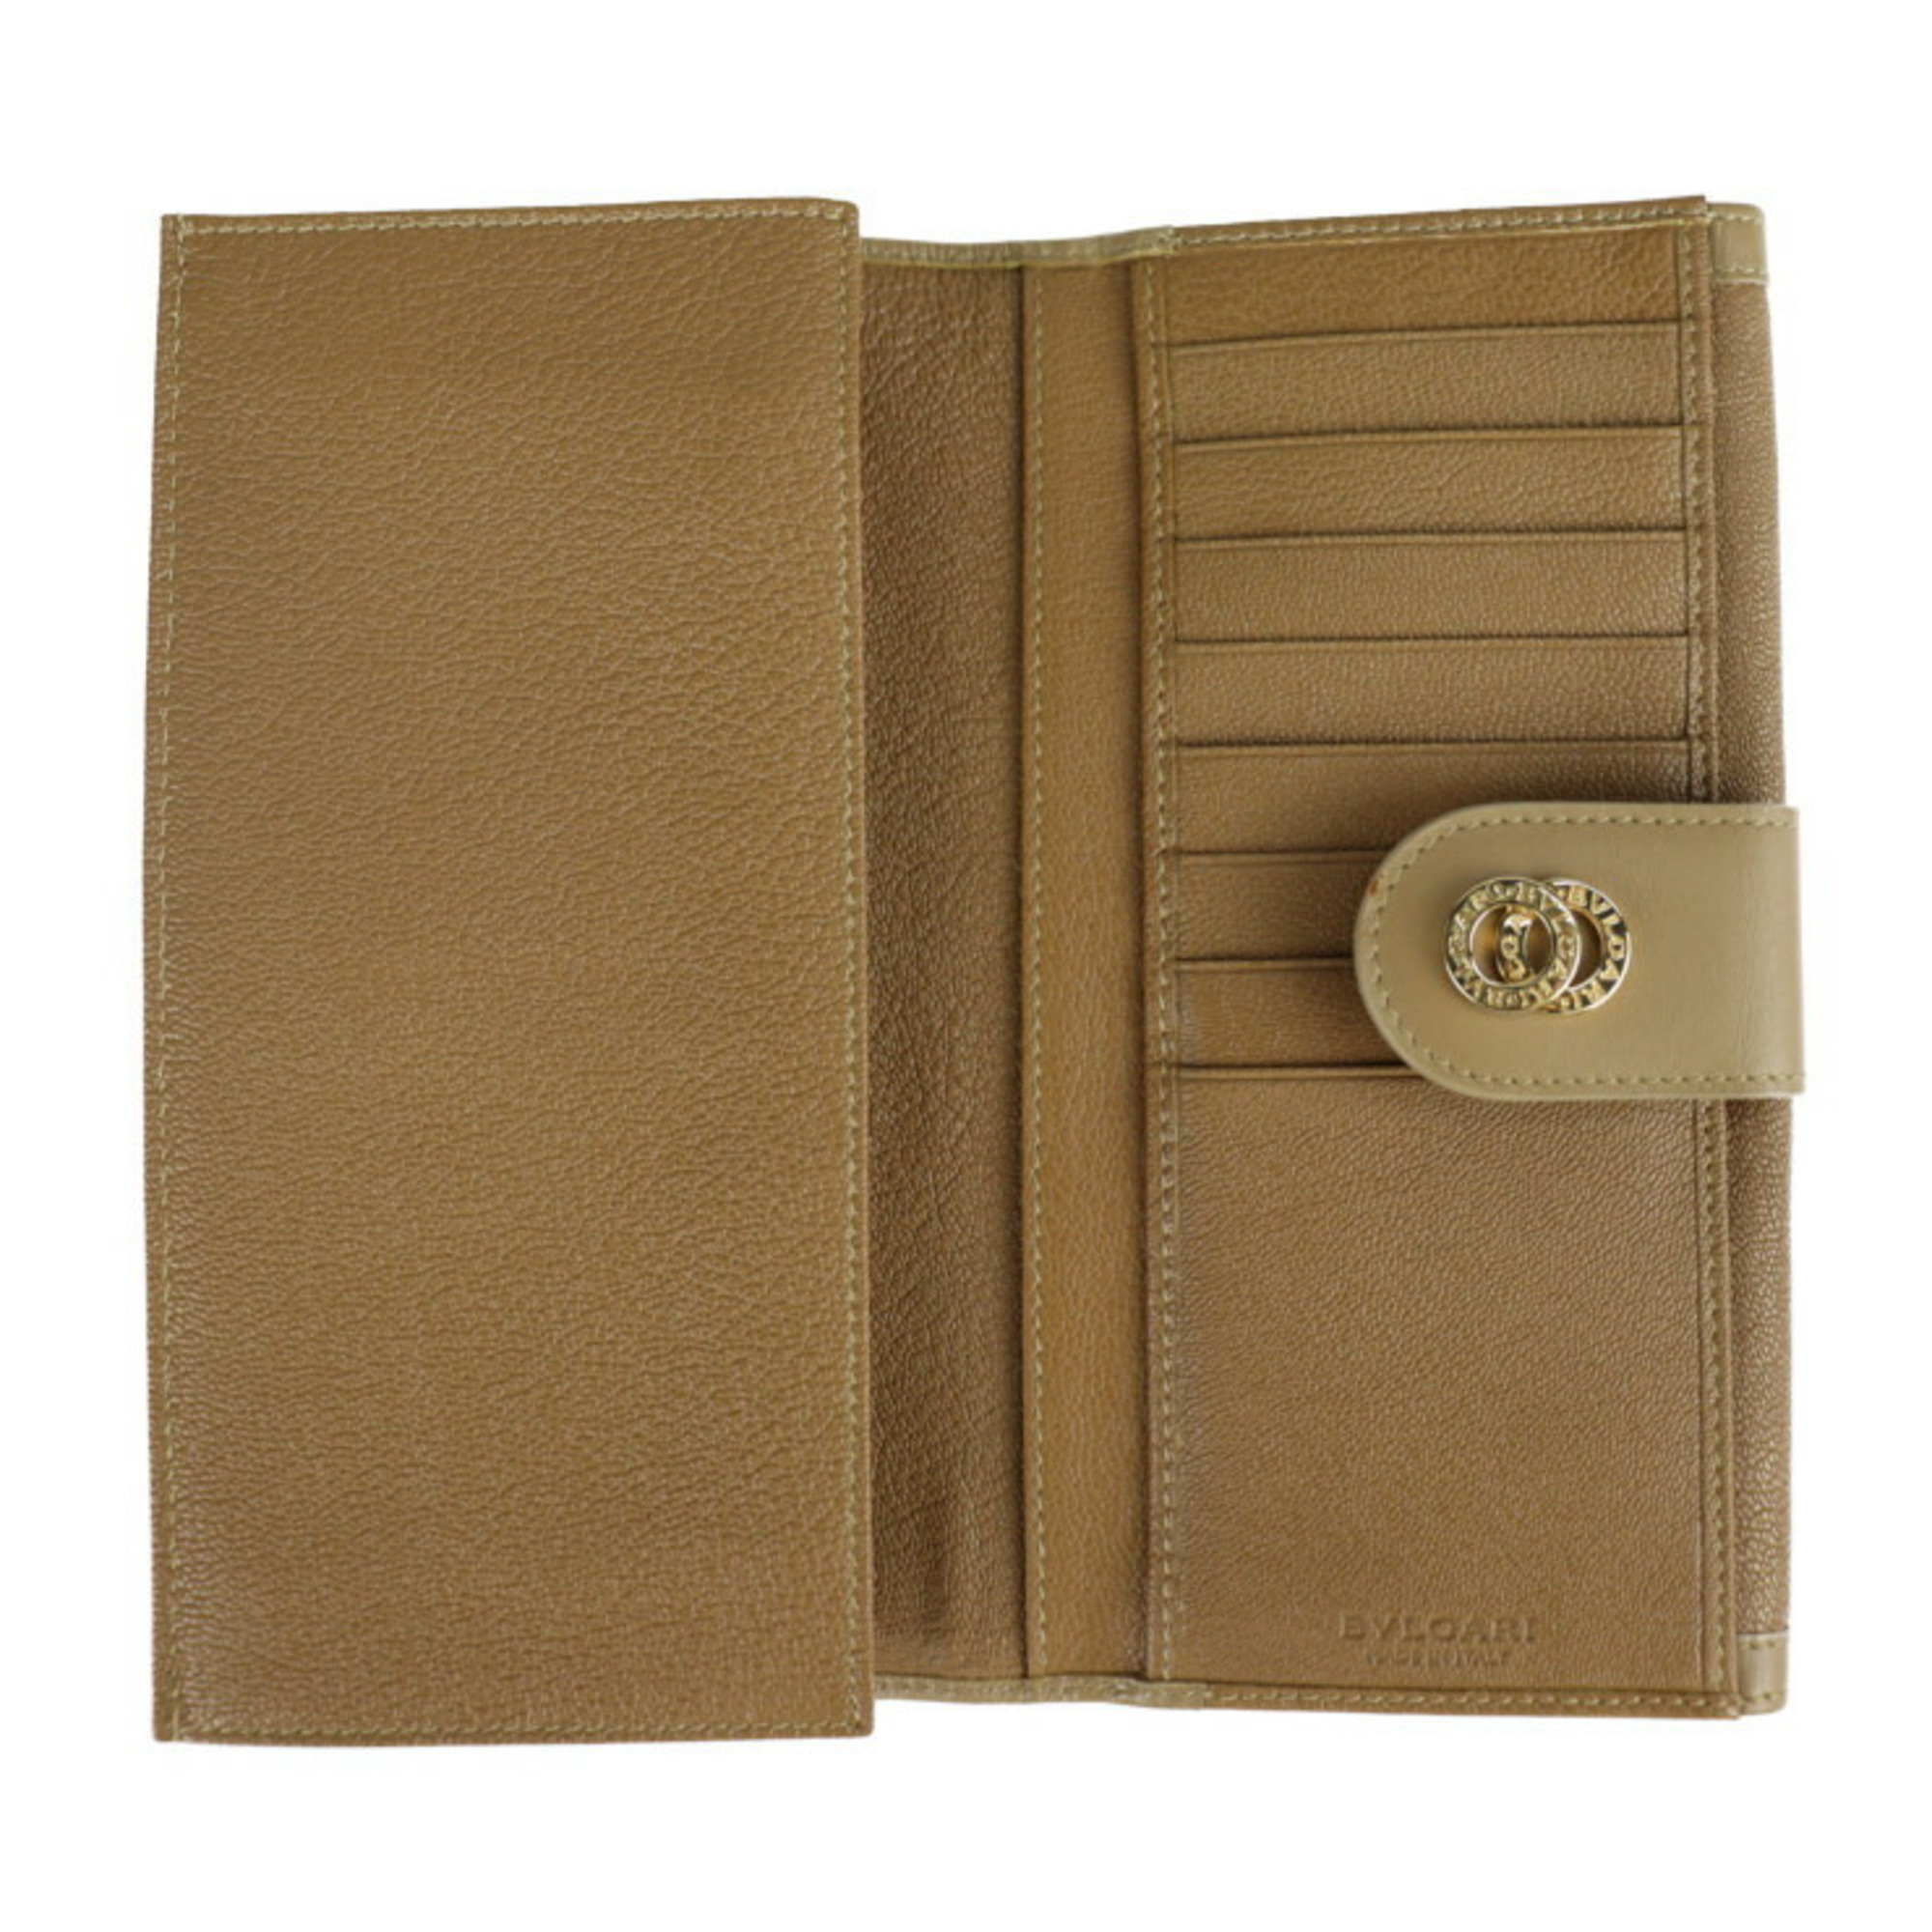 BVLGARI Bulgari DOPPIOTONDO Doppiotondo bi-fold wallet 26856 leather light brown series gold metal fittings W hook long